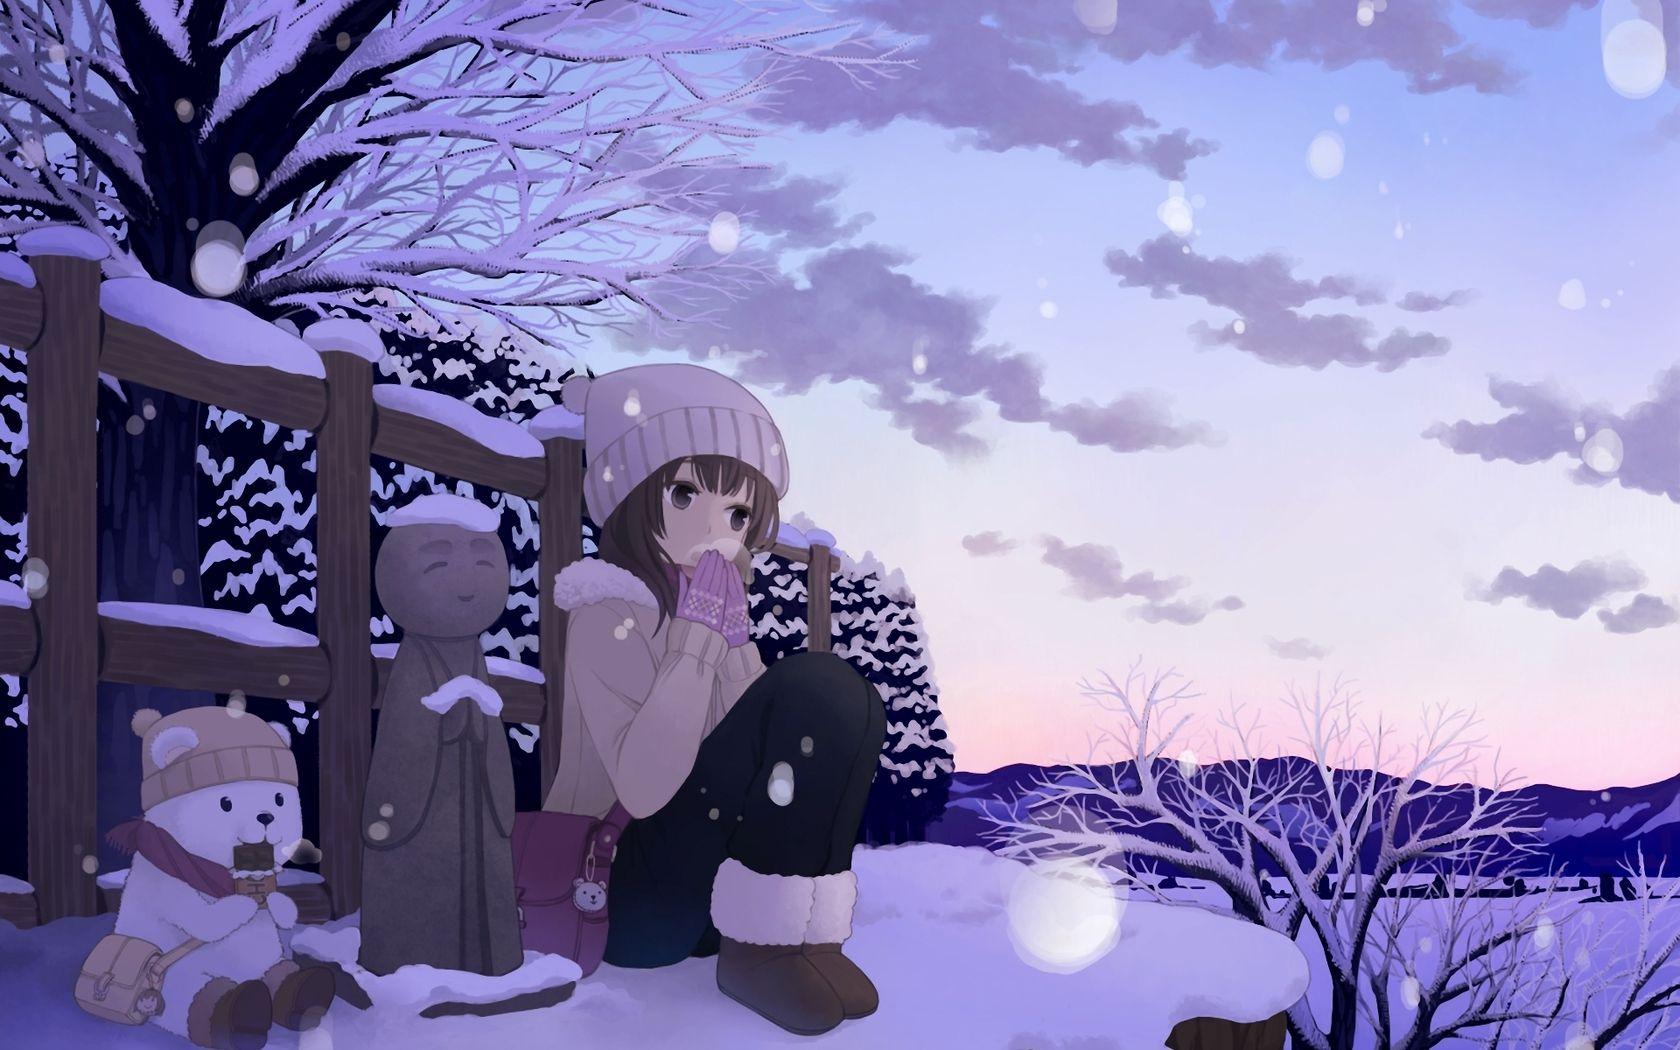 Anime Winter Wallpaper 42573 1680x1050 px. Anime art beautiful, Winter wallpaper hd, Anime wallpaper